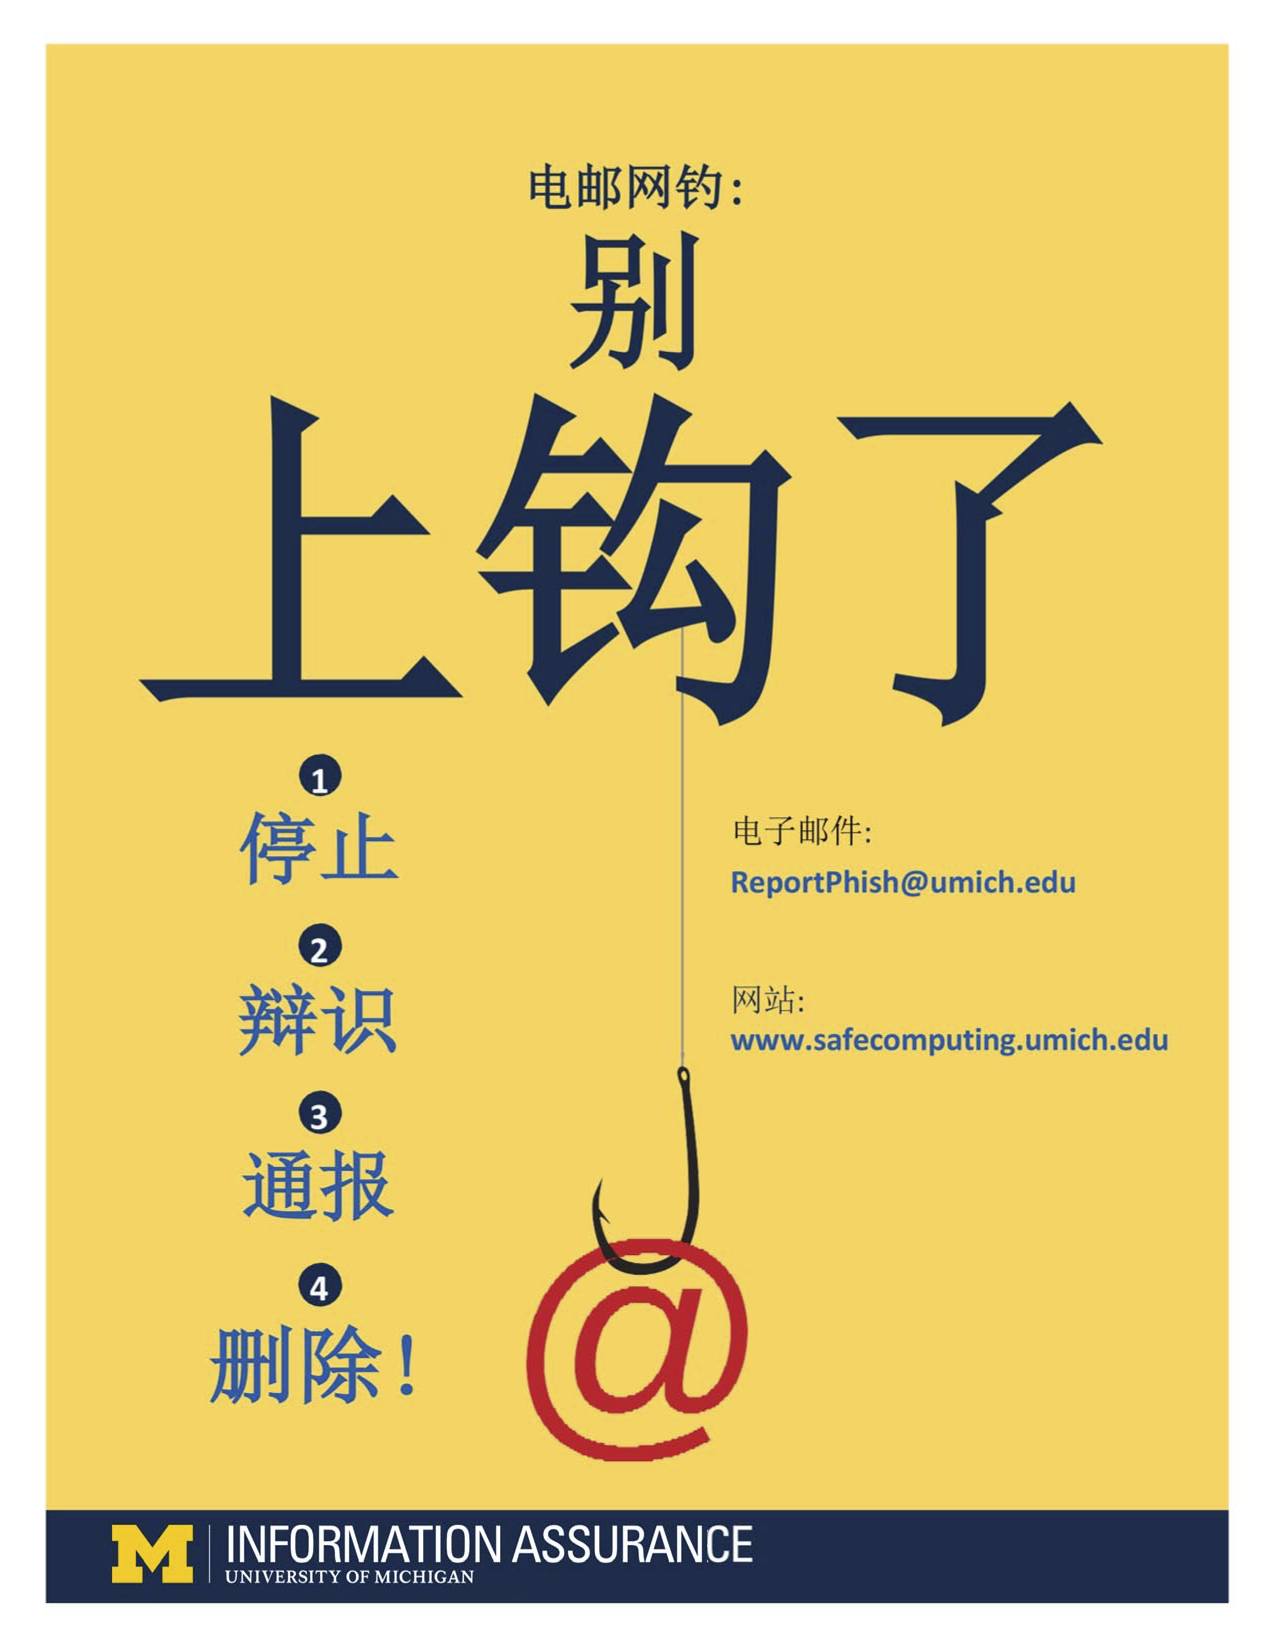 Image of the anti-phishing poster in Mandarin.